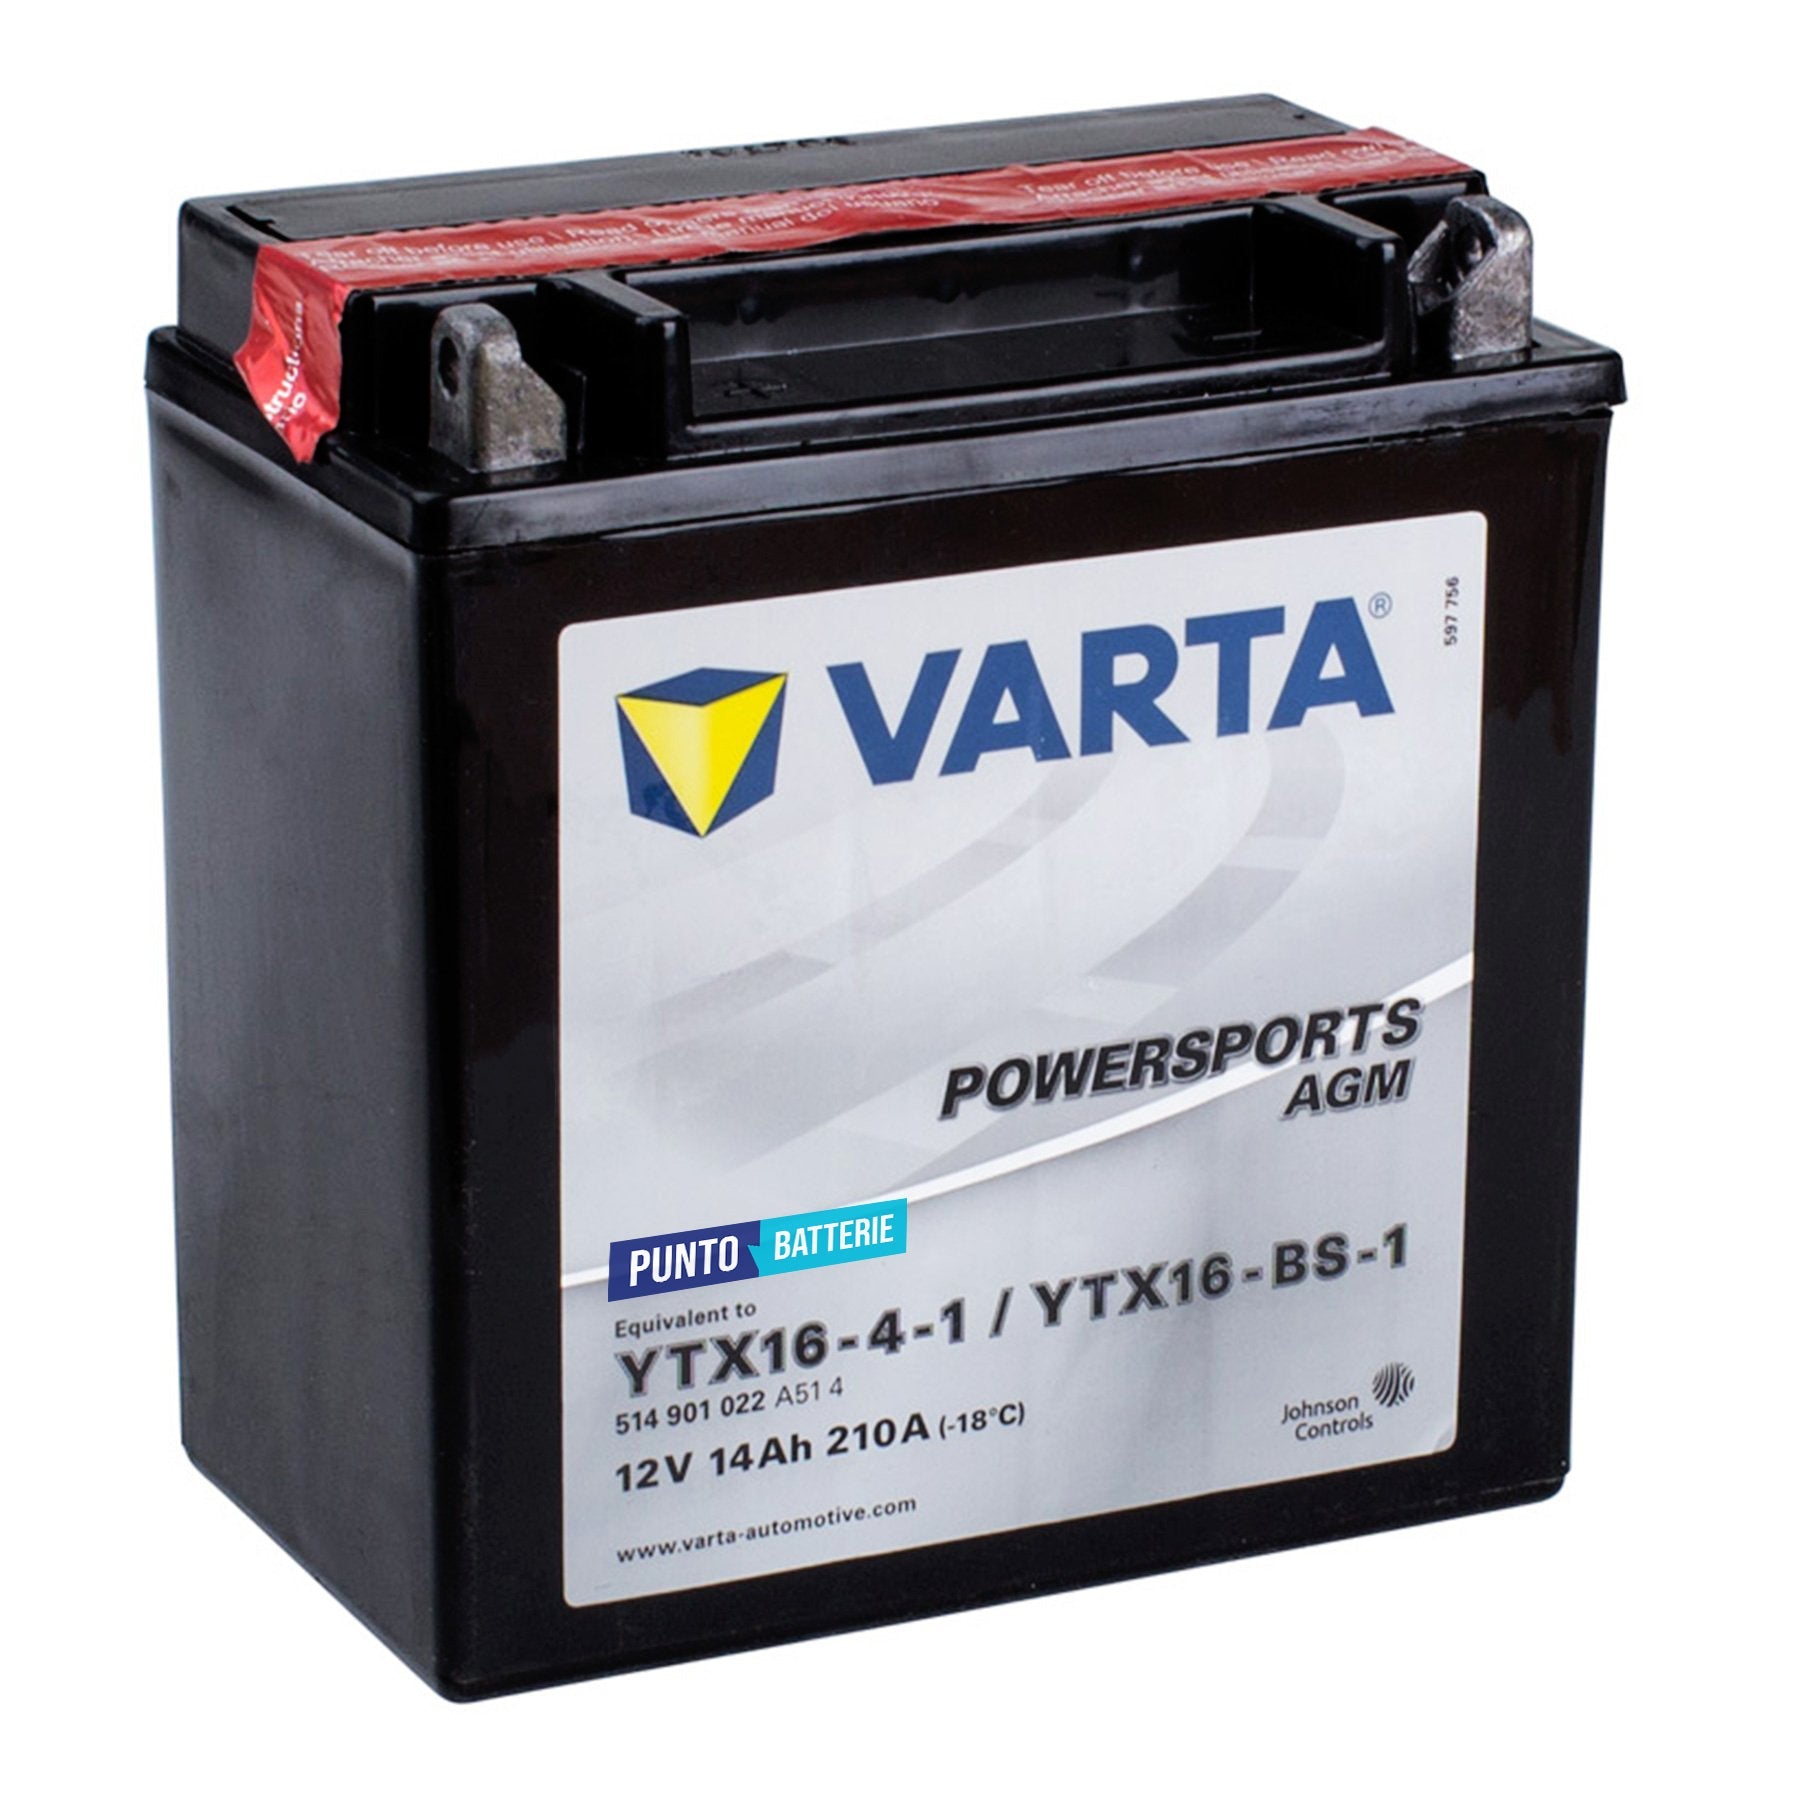 Batteria originale Varta Powersport AGM YTX16-4-1, dimensioni 150 x 87 x 161, polo positivo a sinistra, 12 volt, 14 amperora, 210 ampere. Batteria per moto, scooter e powersport.